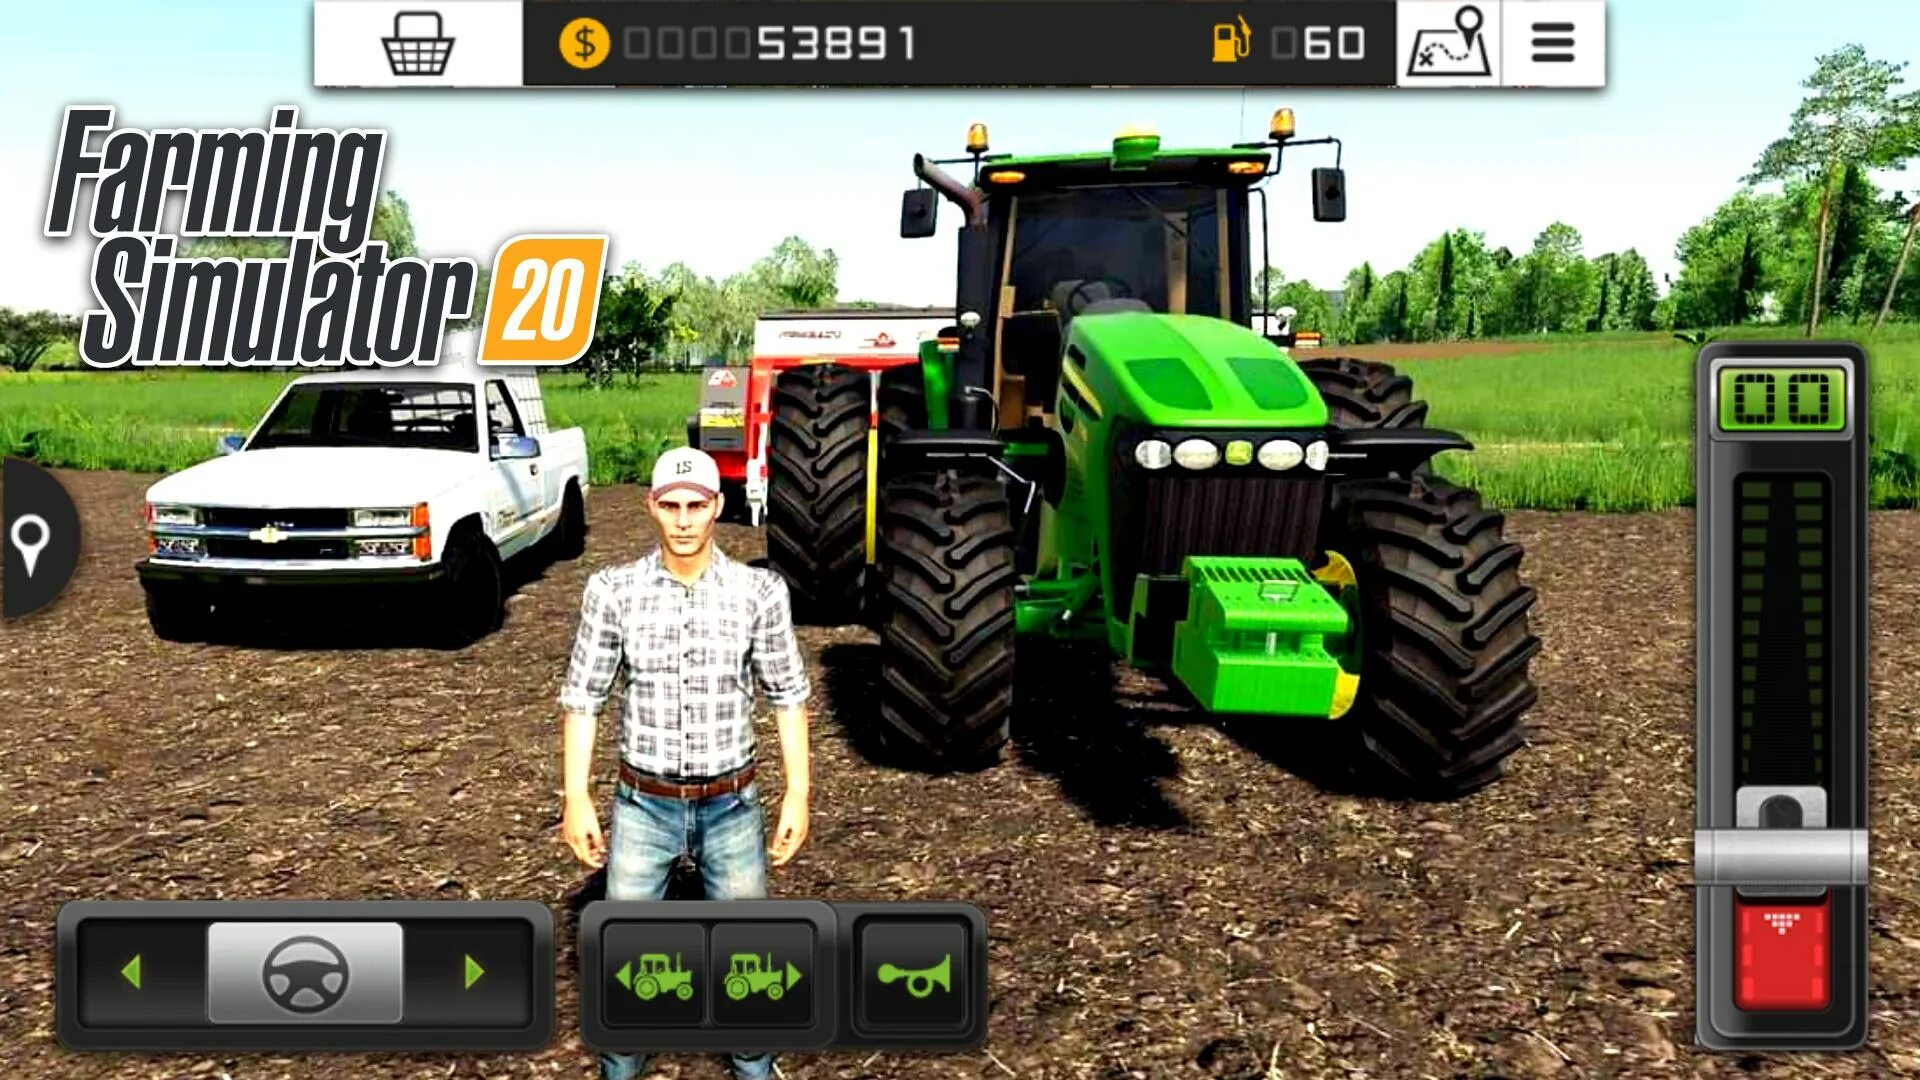 Фермер симулятор 20. Ферма симулятор 2020. Симулятор тракториста 20. Farming Simulator 2020 mobile. Игру фс 20 на андроид